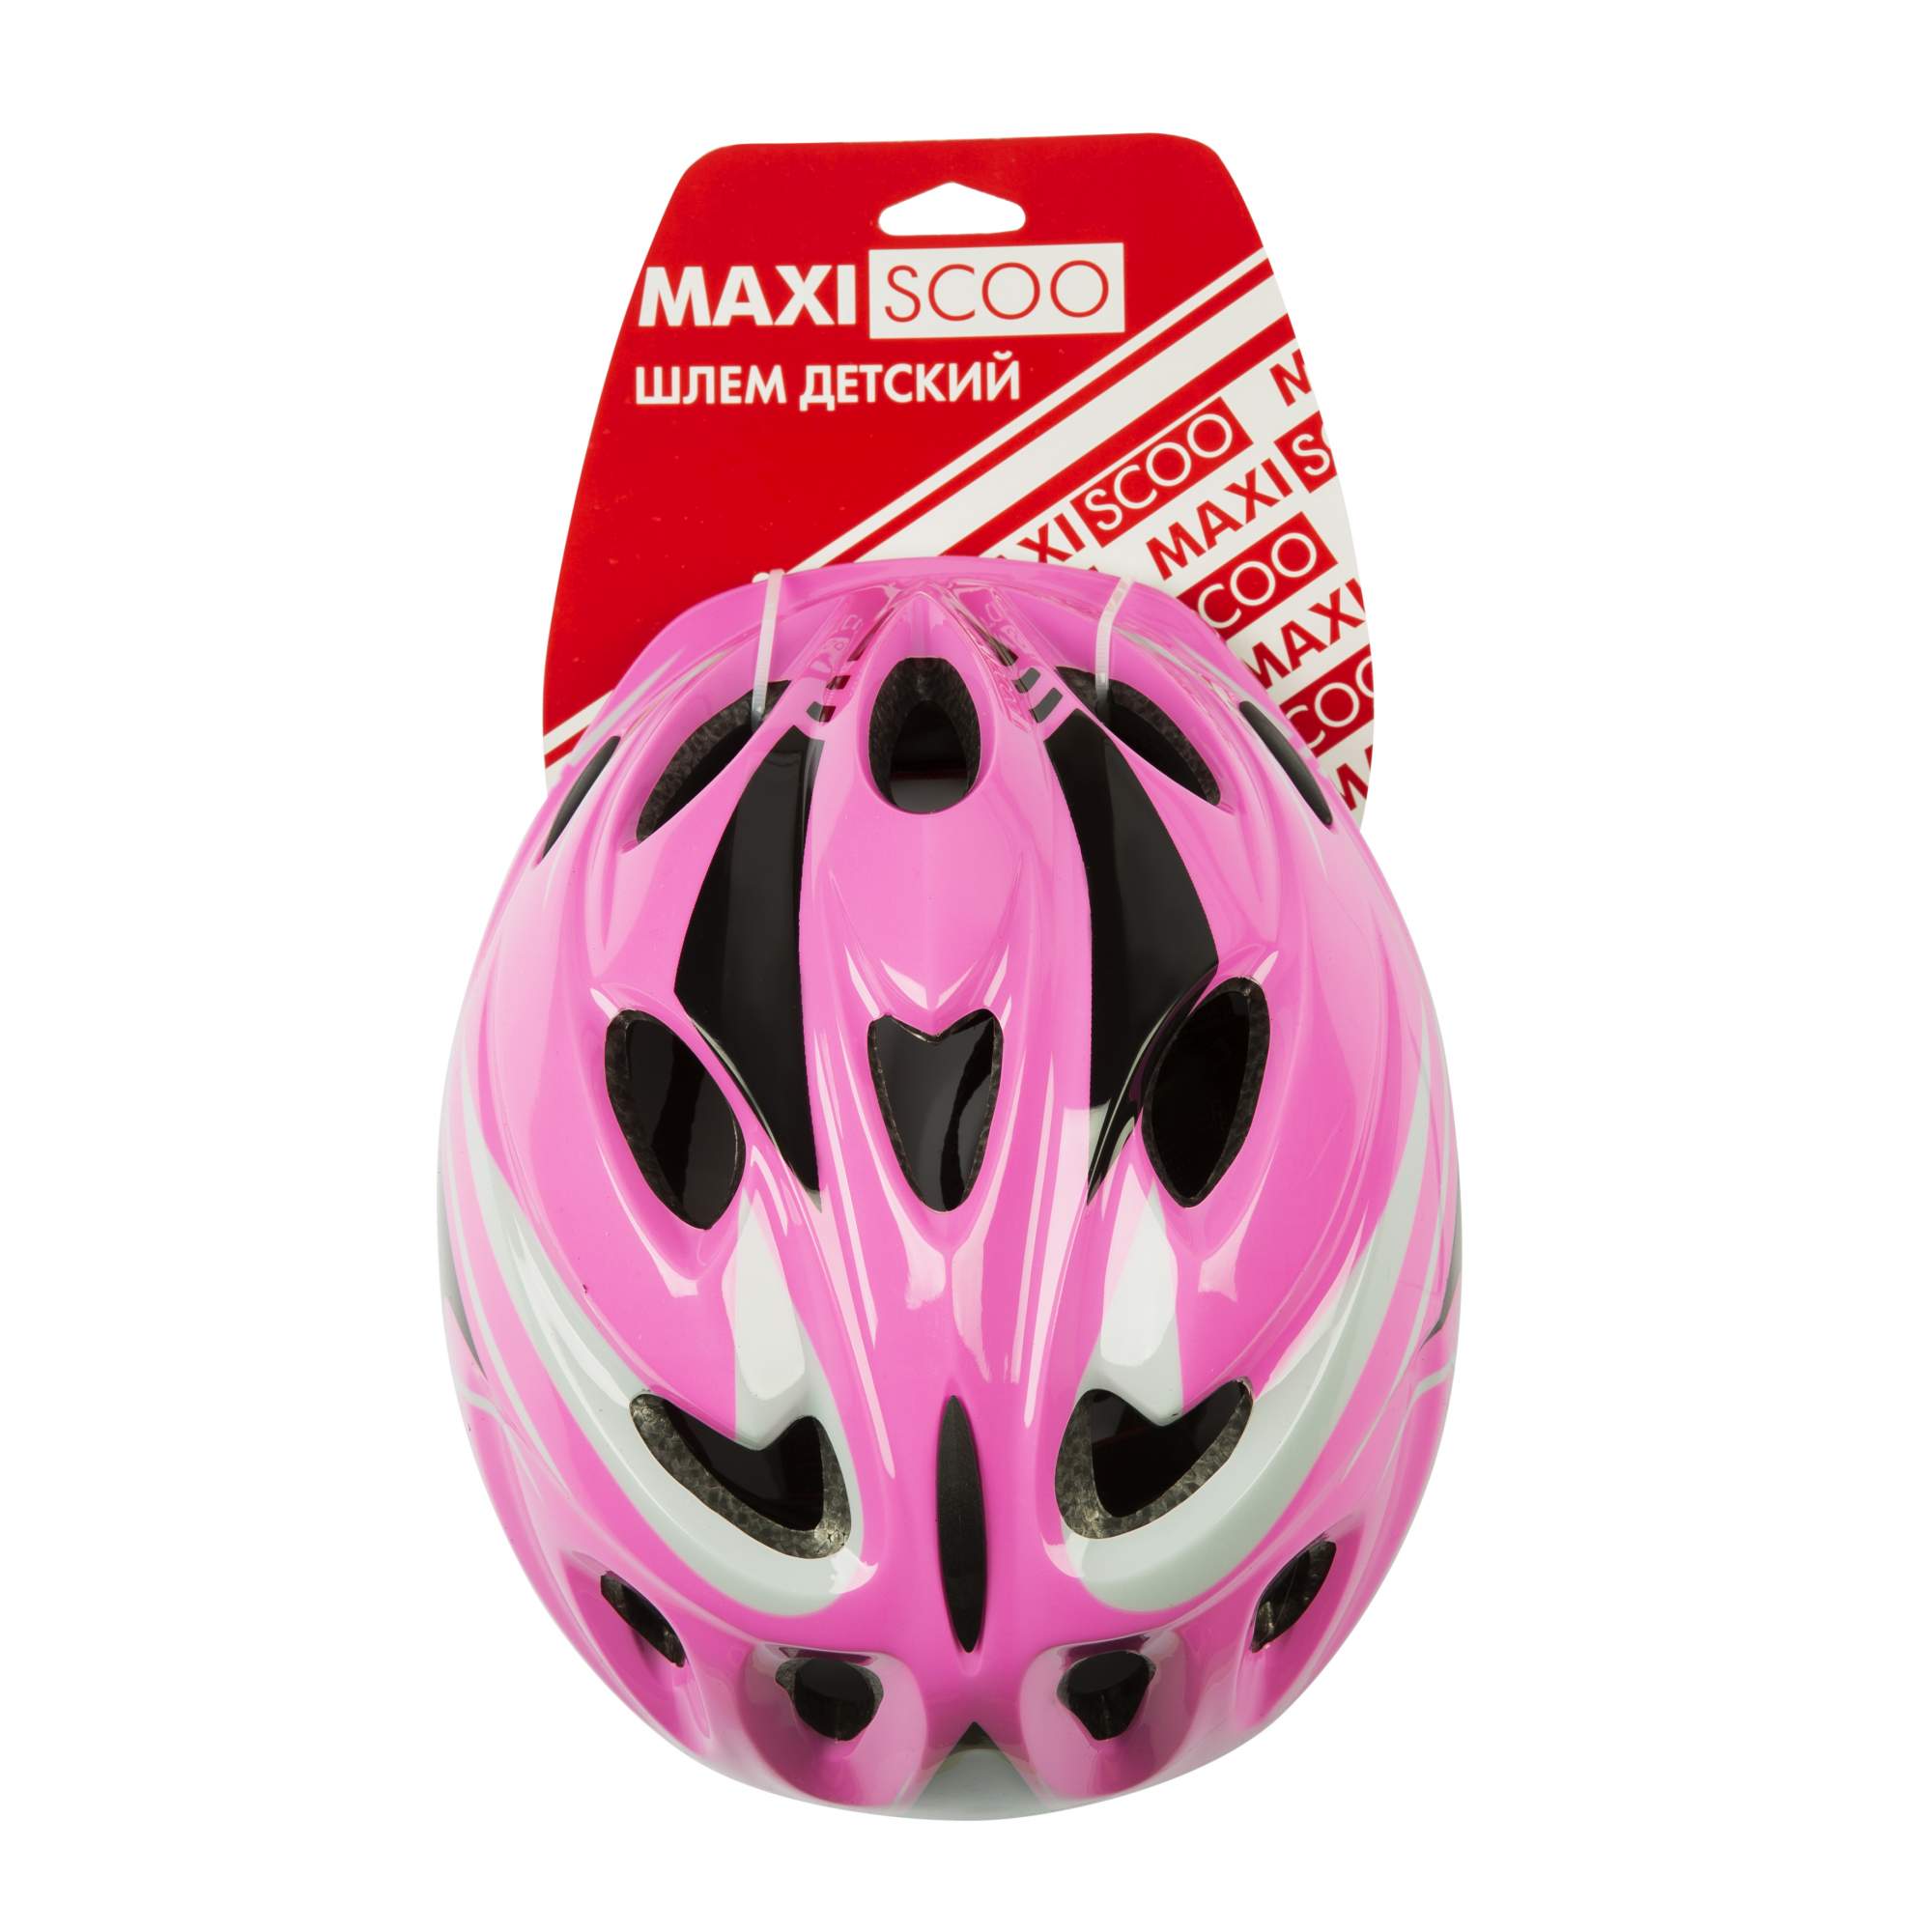 Шлем Детский MAXISCOO Размер M, Розовый